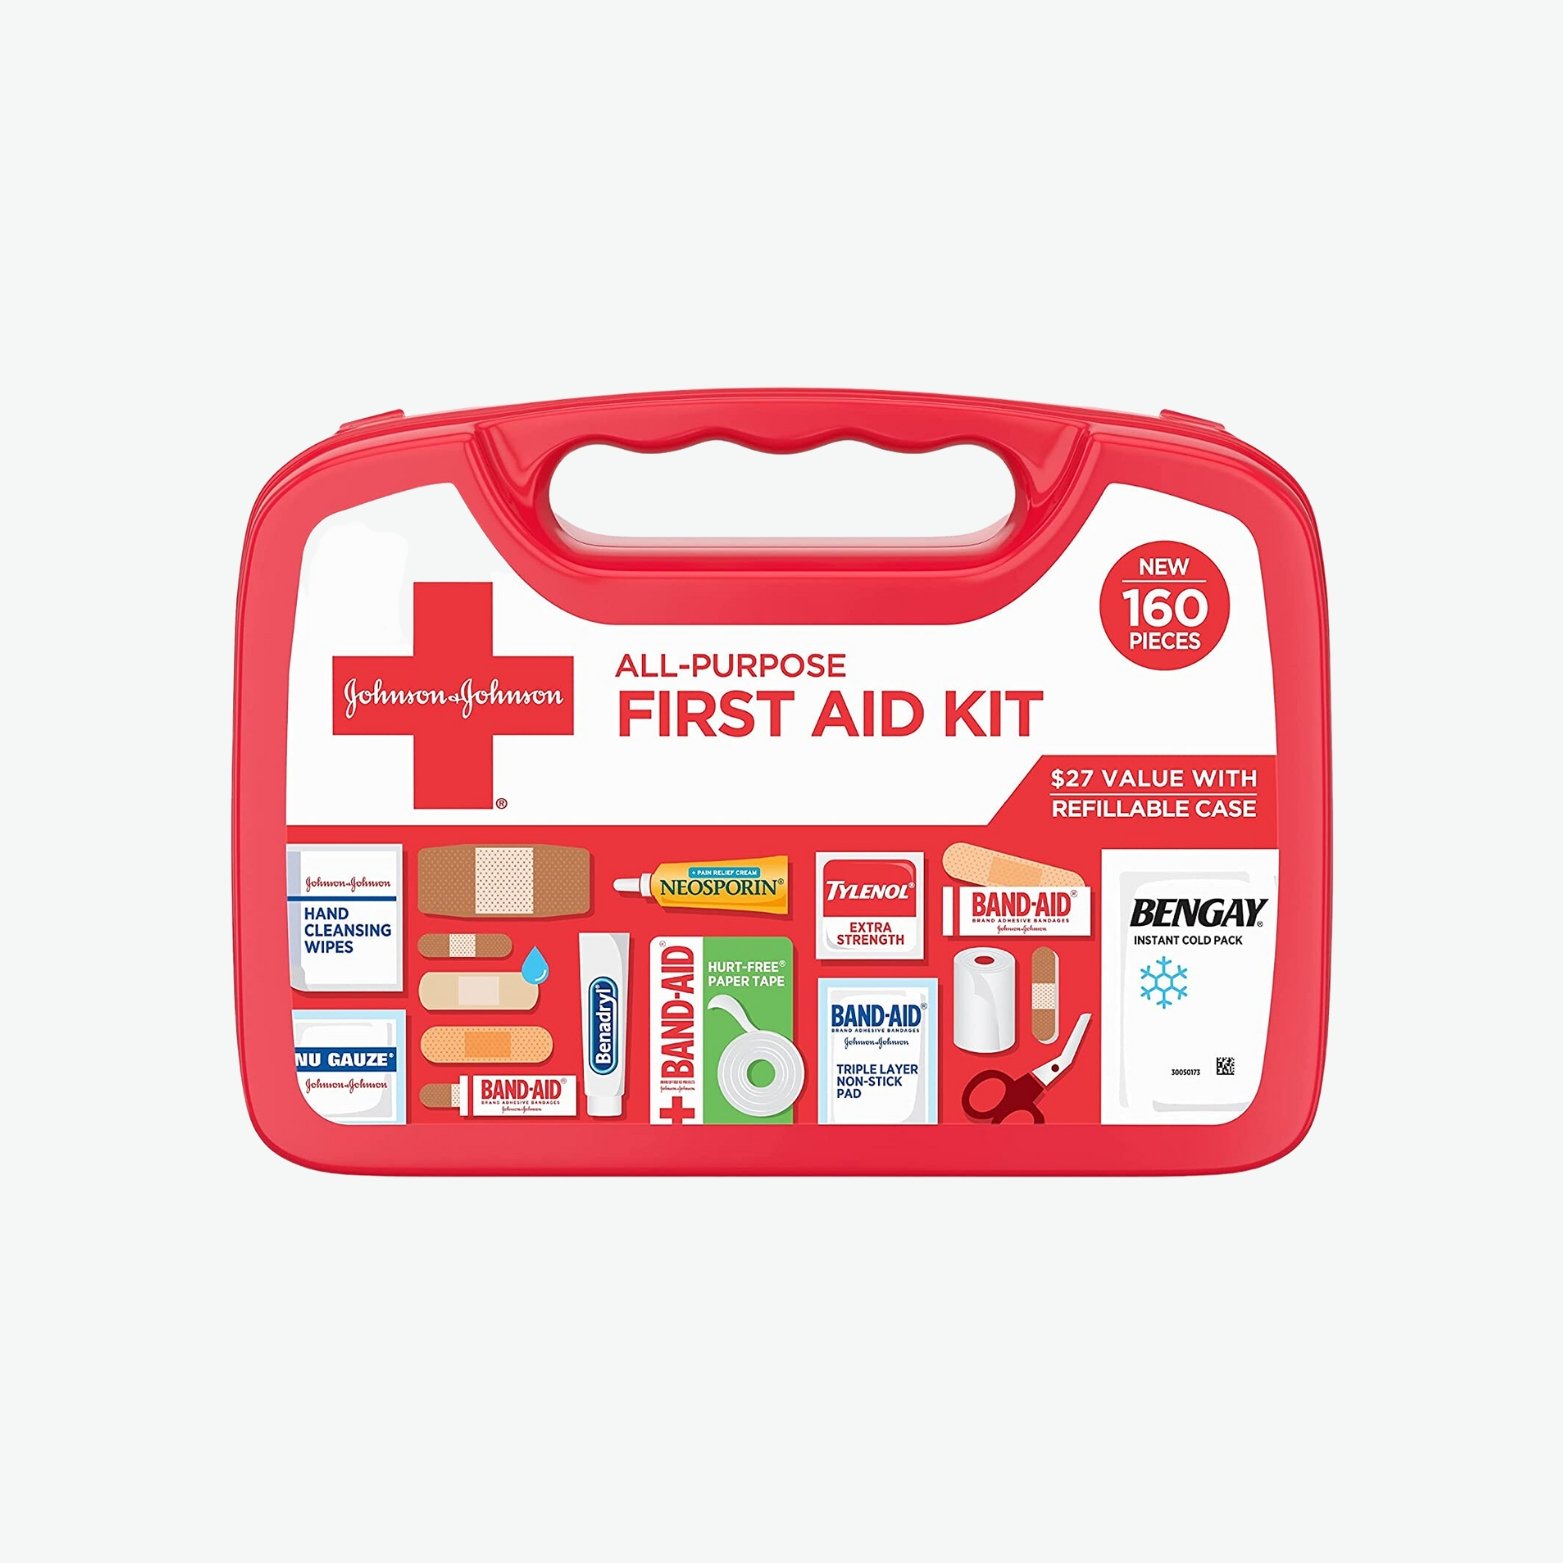 First Aid Kit copy.jpg